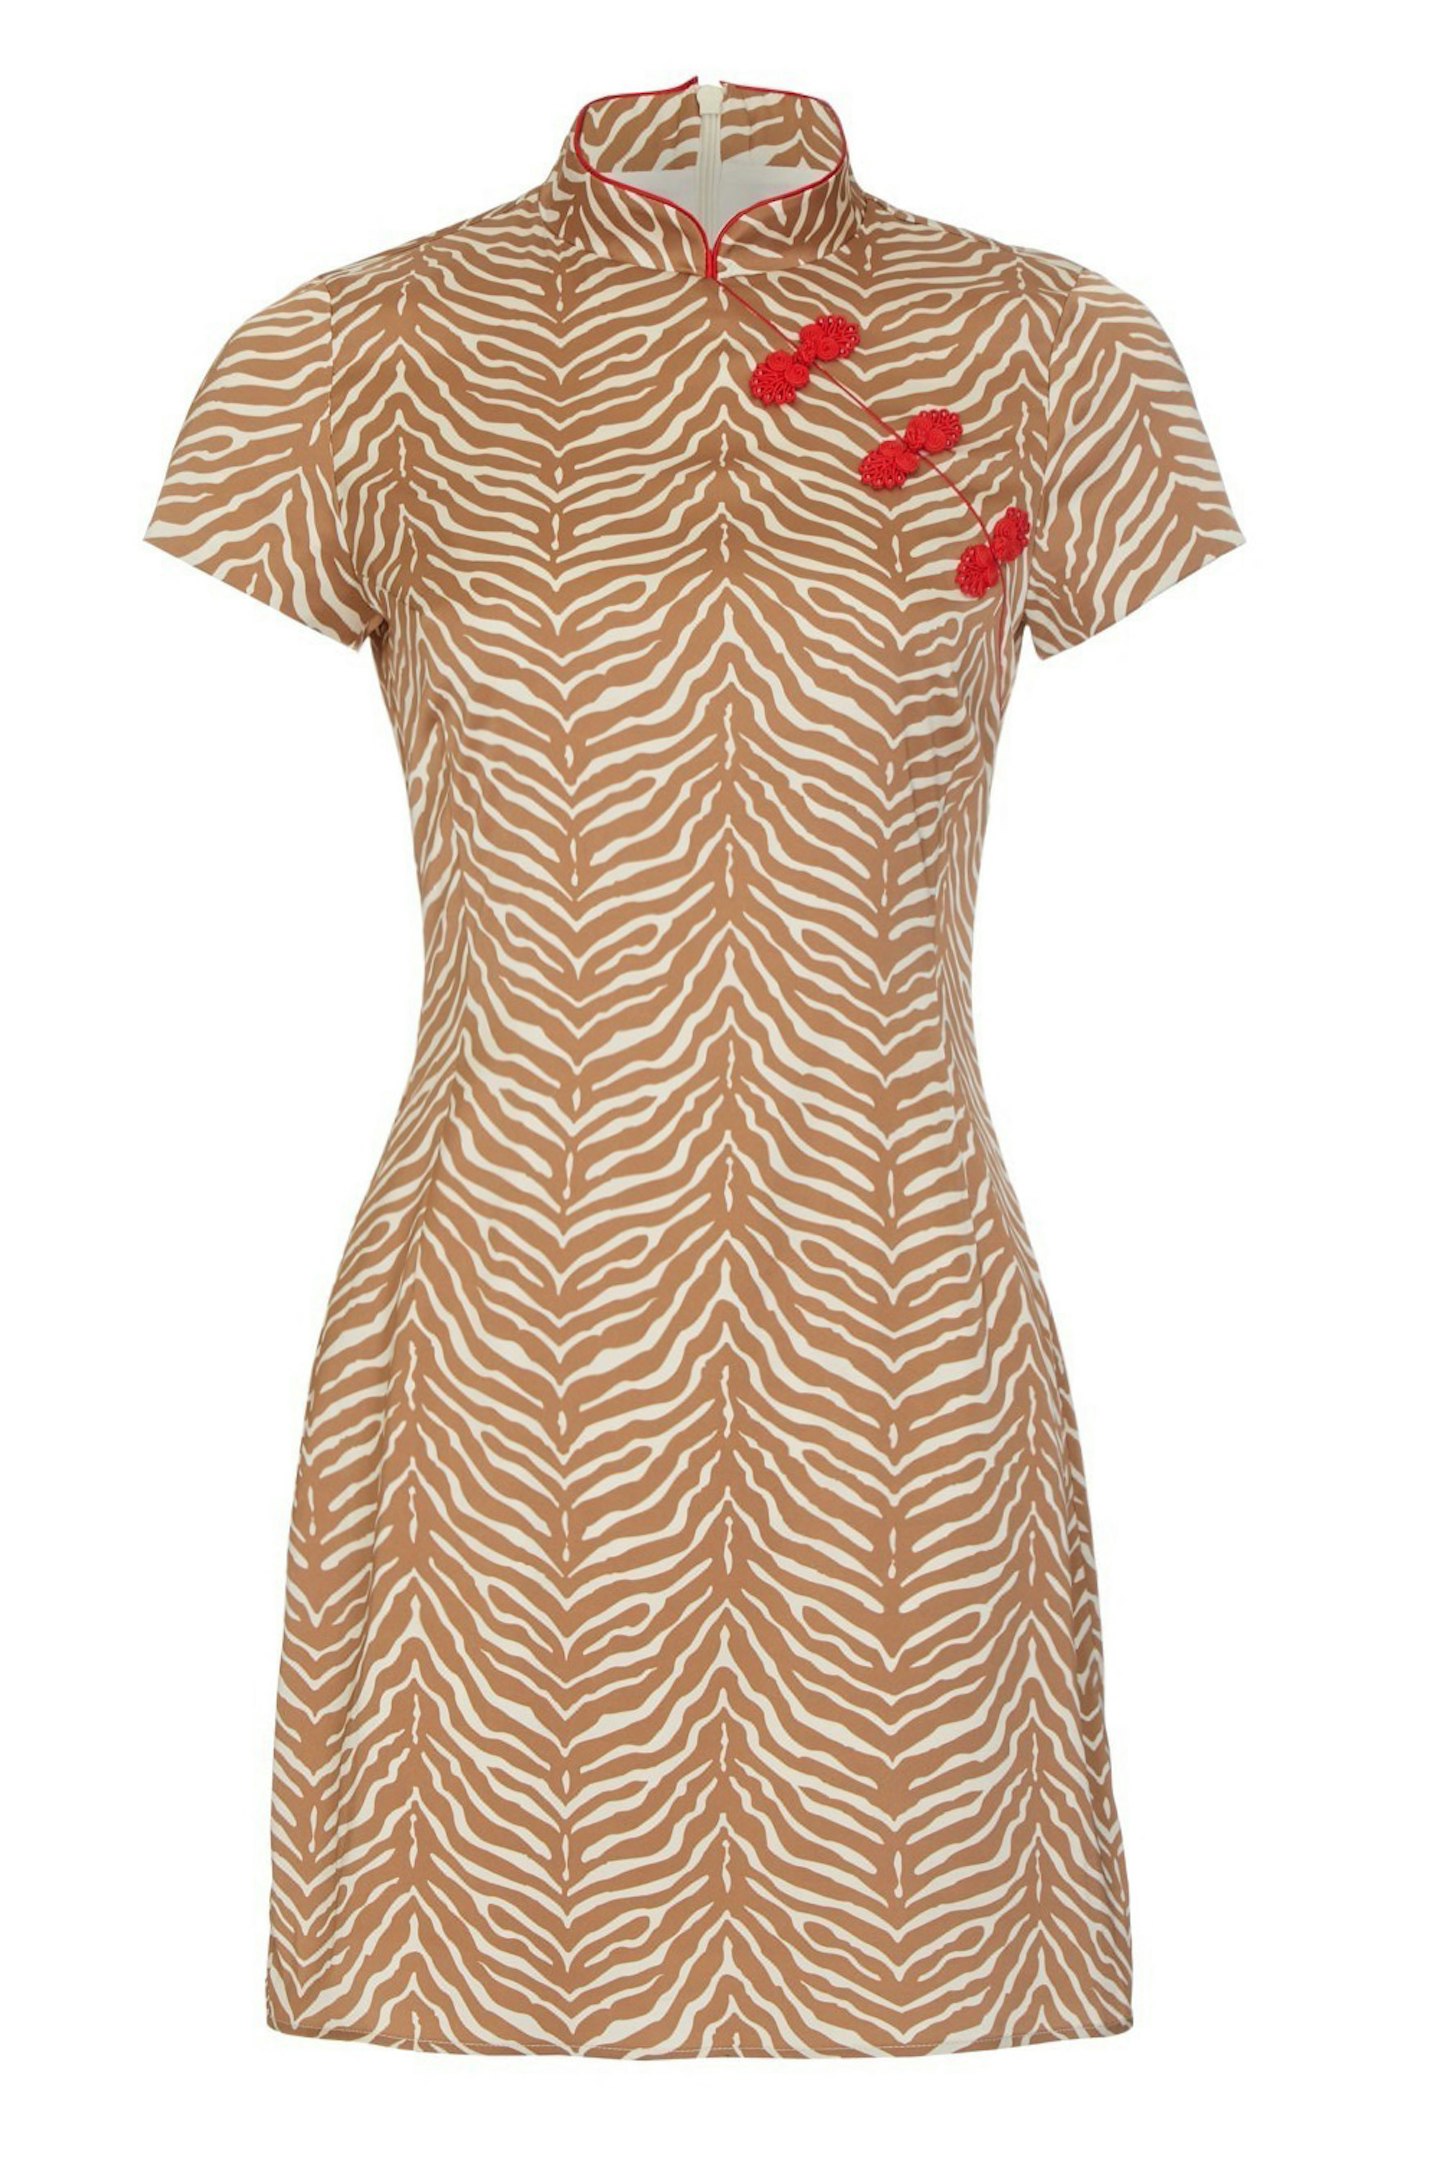 De La Vali, Suki Short Dress, £125 at Amazon